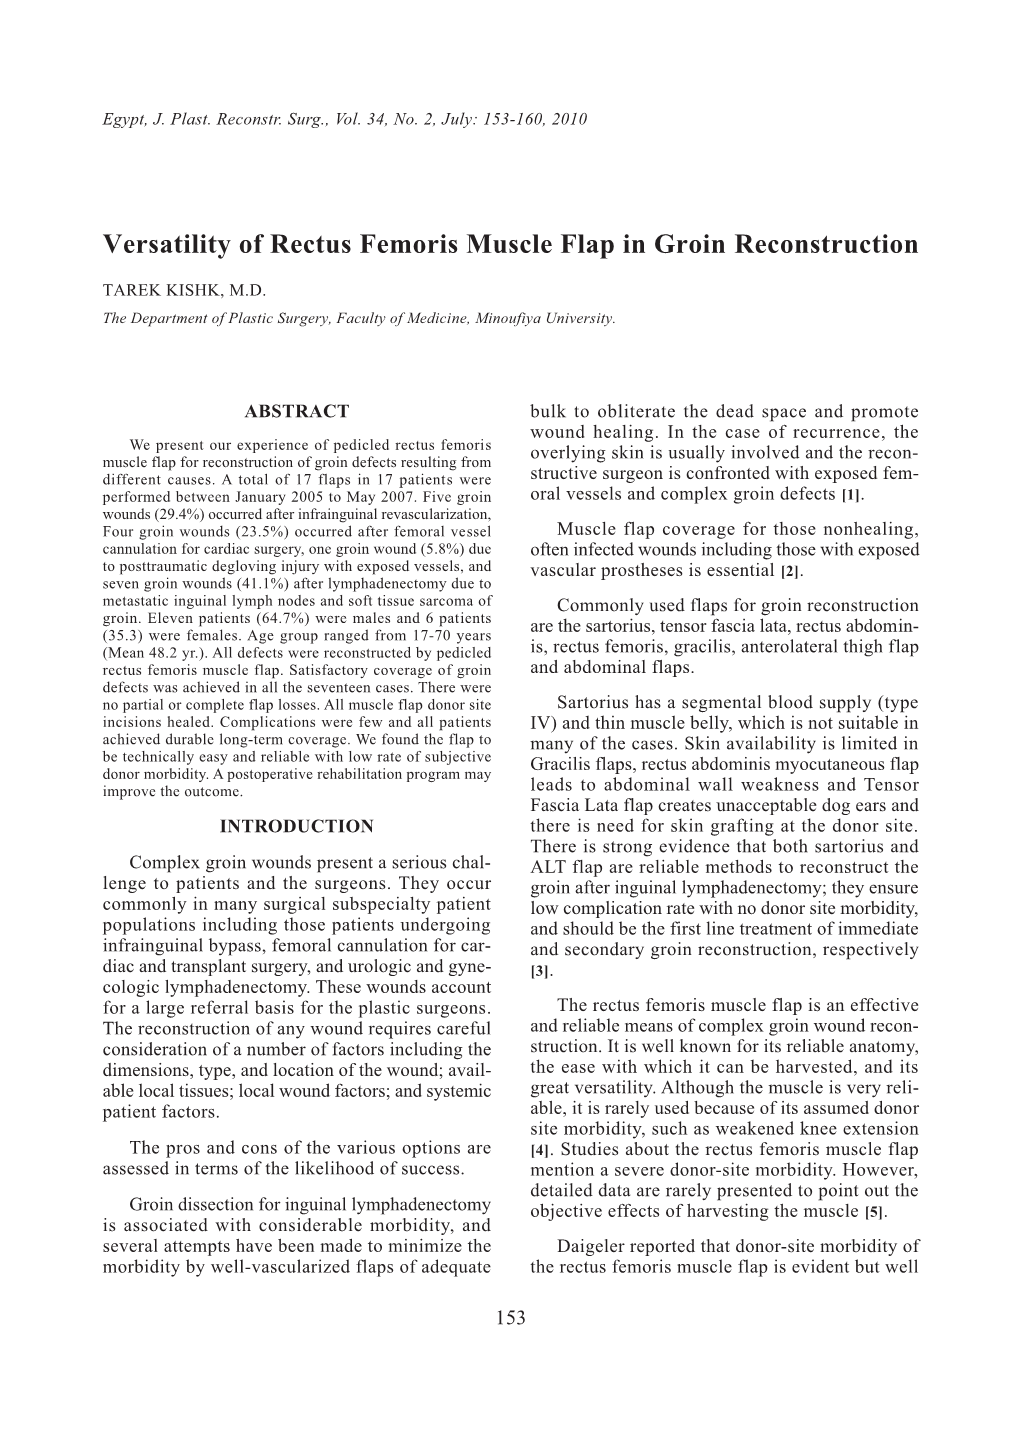 Versatility of Rectus Femoris Muscle Flap in Groin Reconstruction